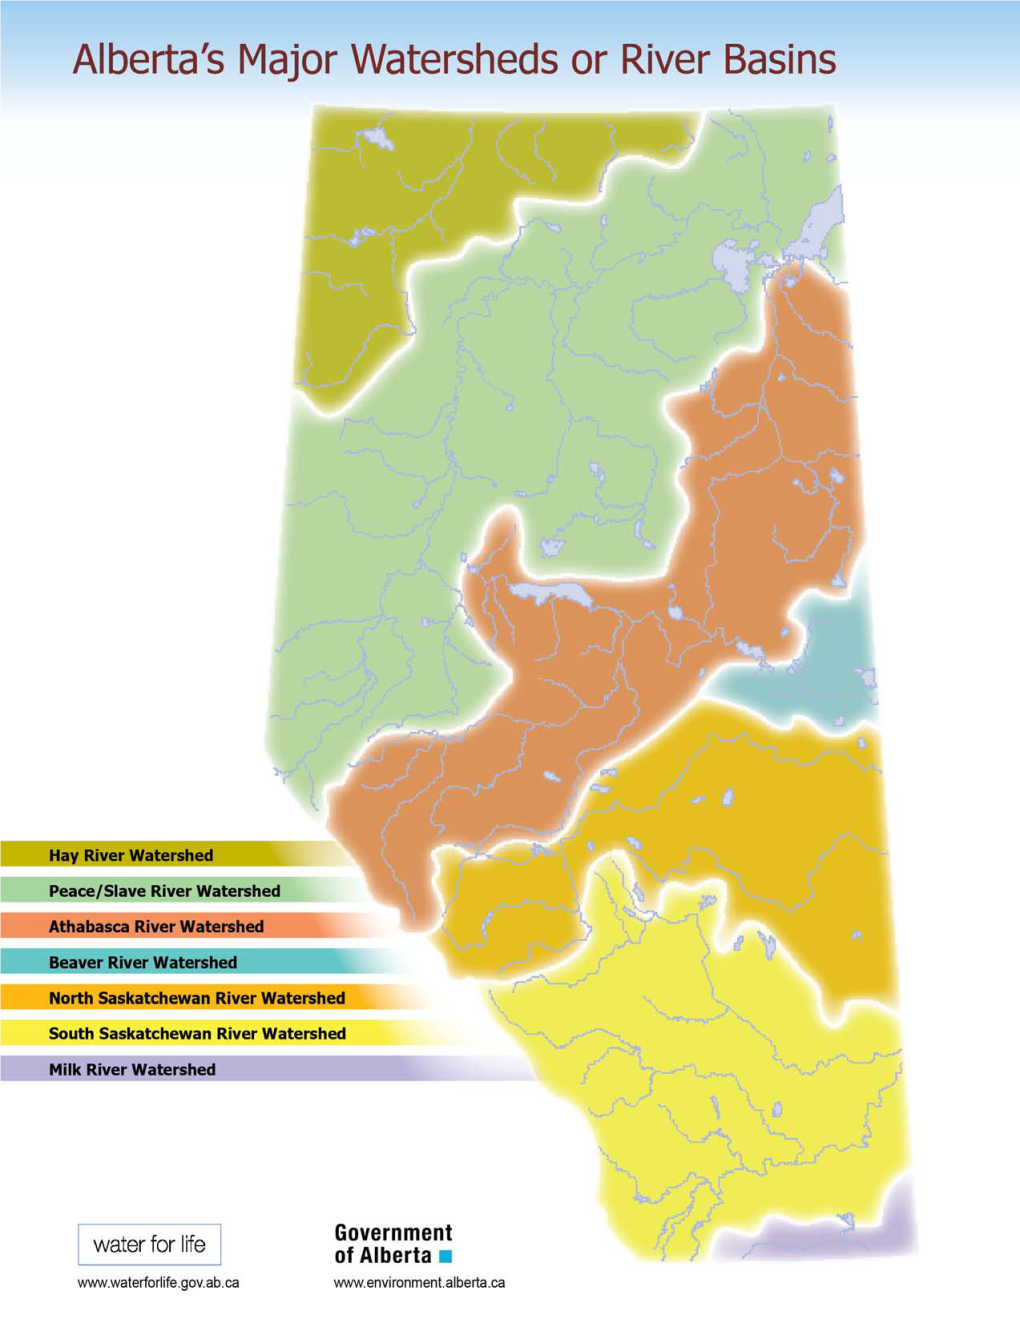 Activity 4: Alberta's Major Watersheds Or River Basins